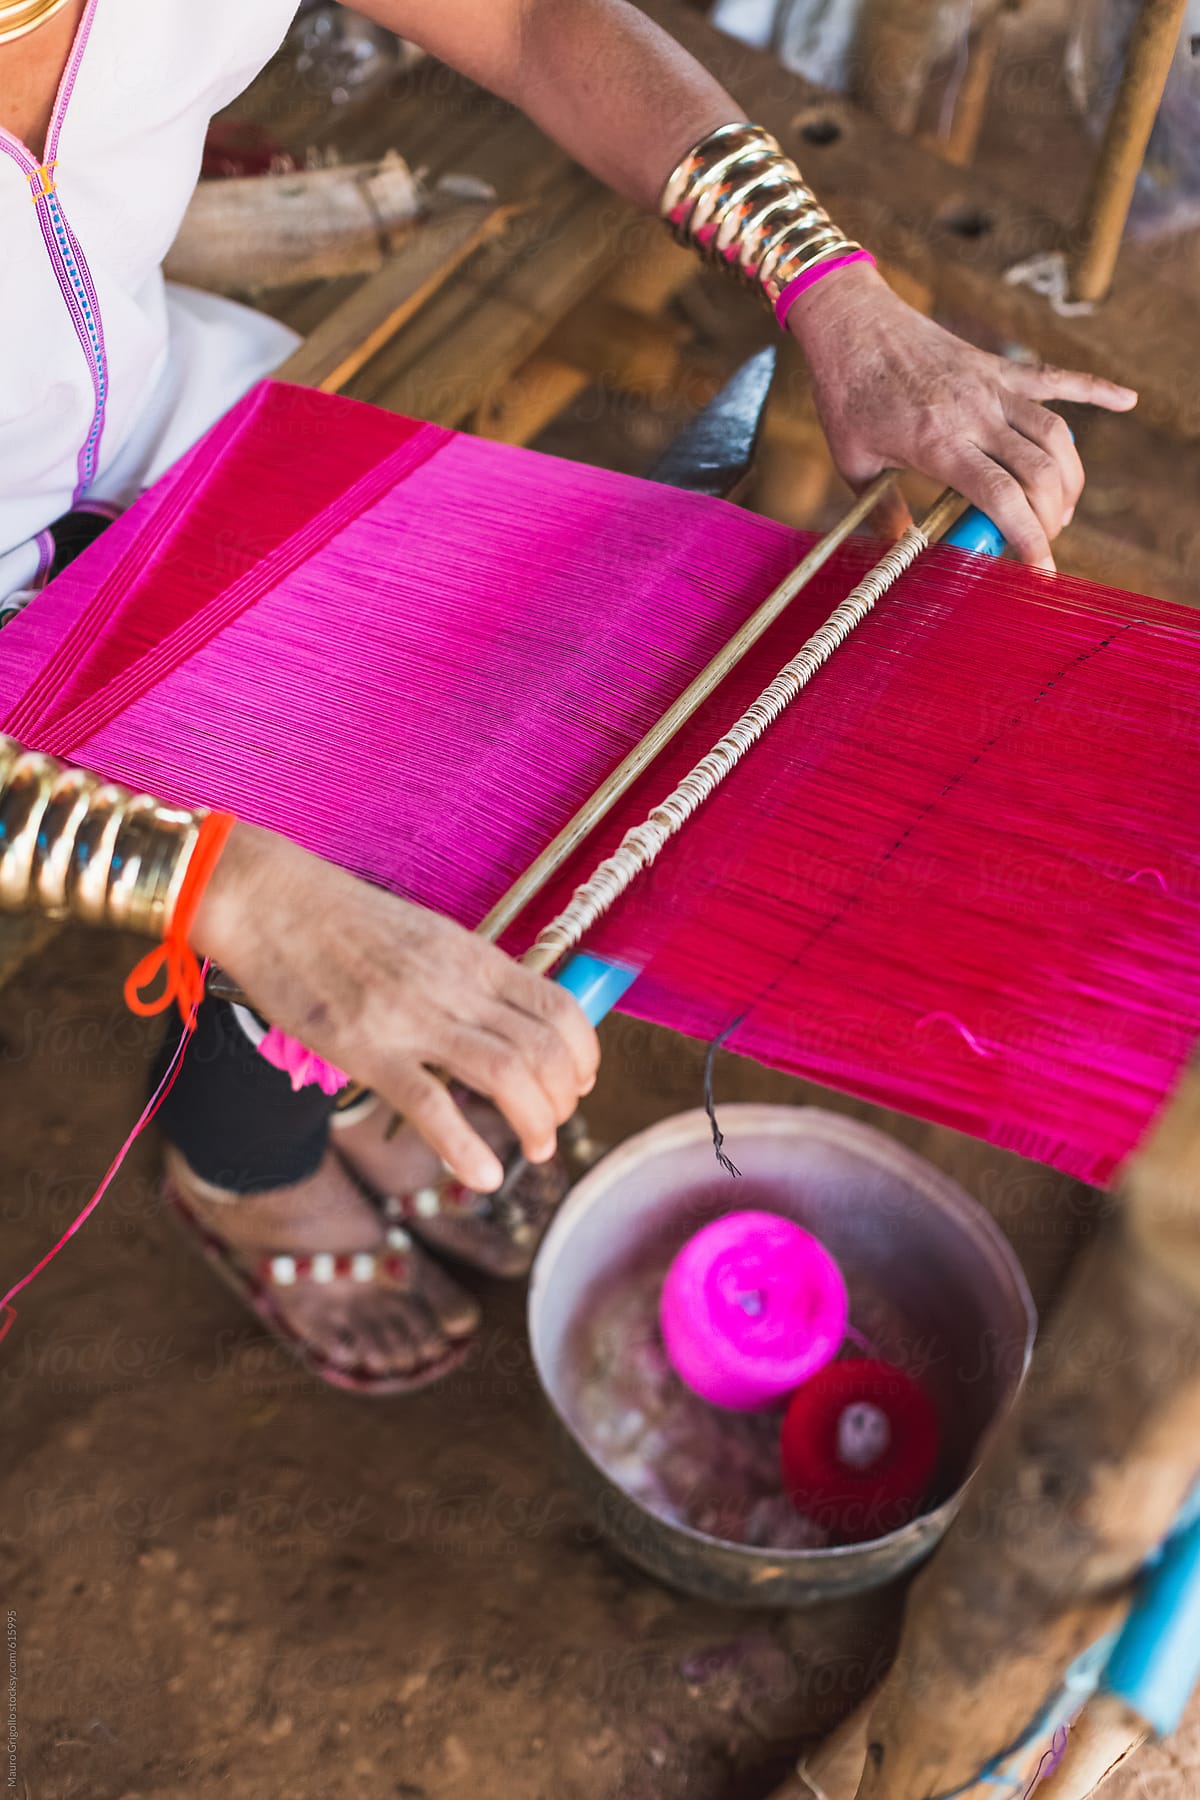 A woman works on the loom to make silk fabrics